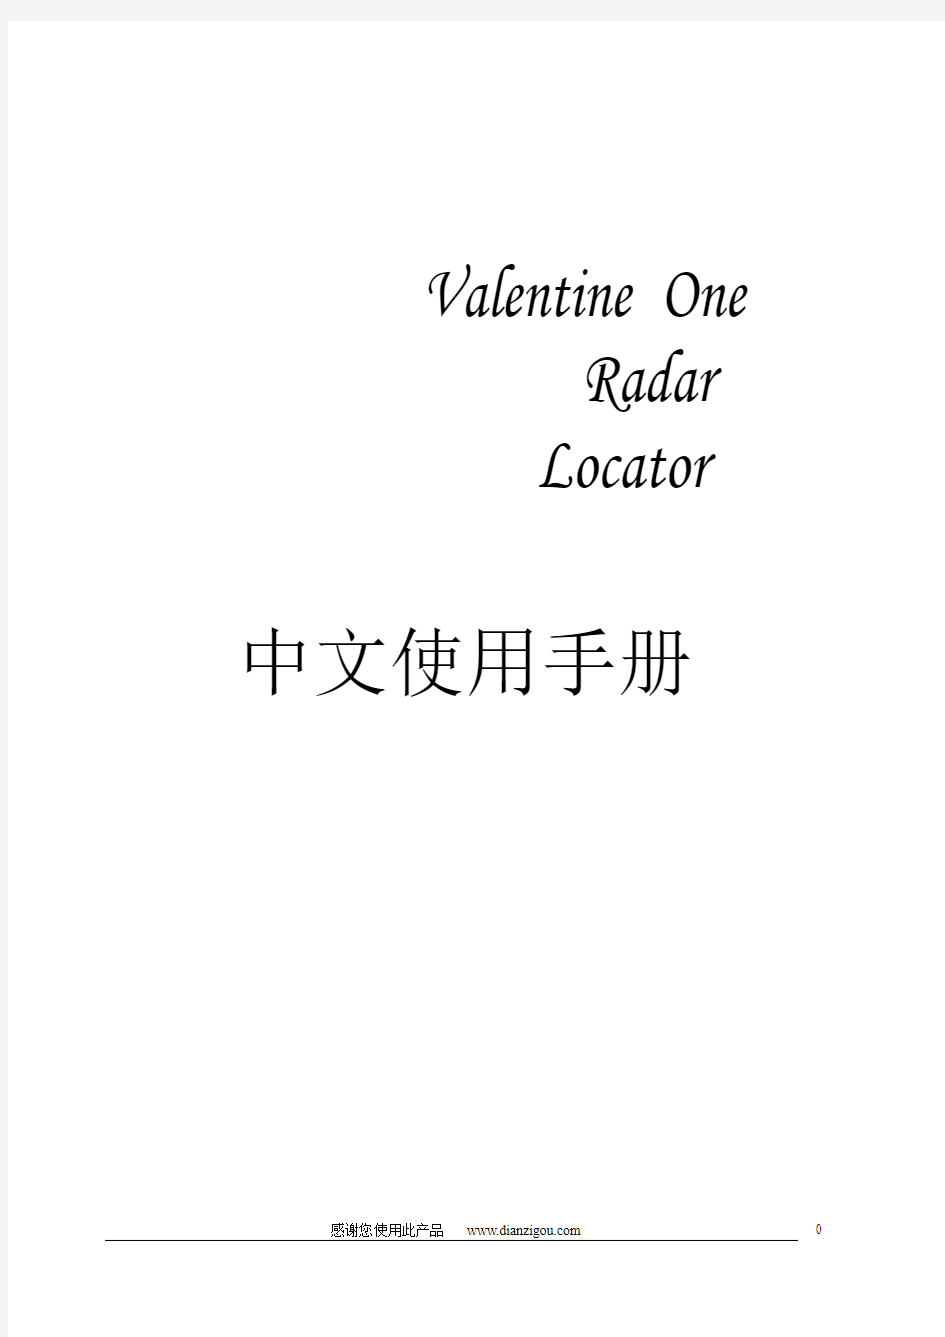 valentine one radar locator 中文使用手册